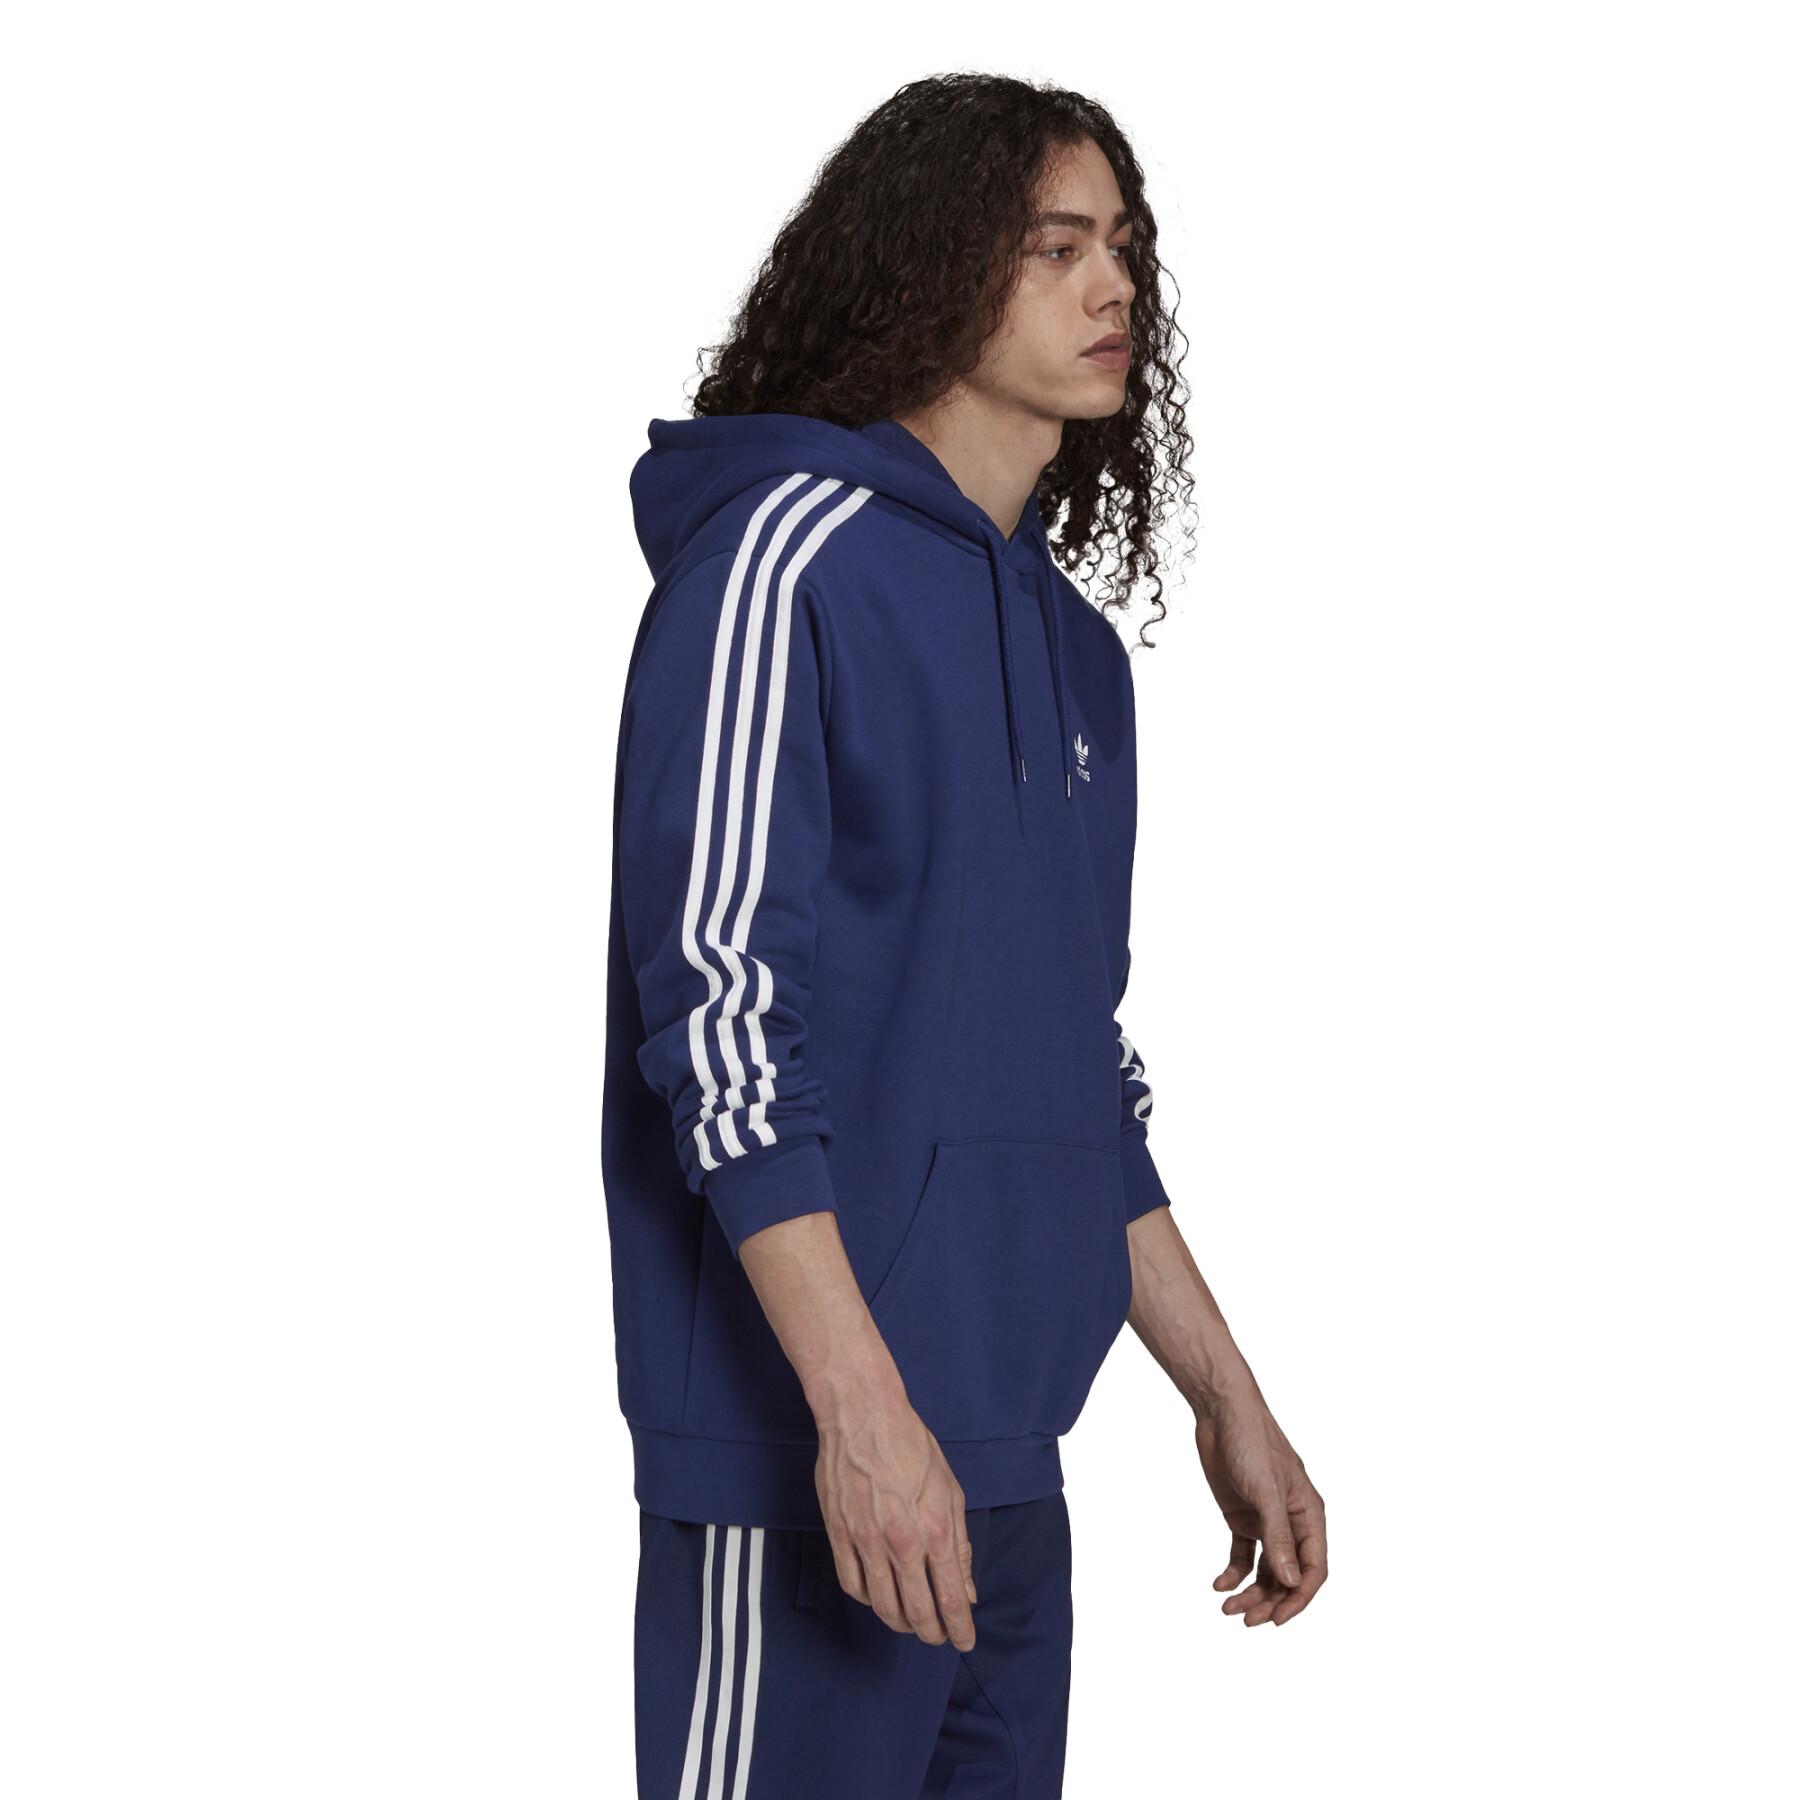 Sweatshirt à capuche adidas Originals Adicolor 3-Stripes